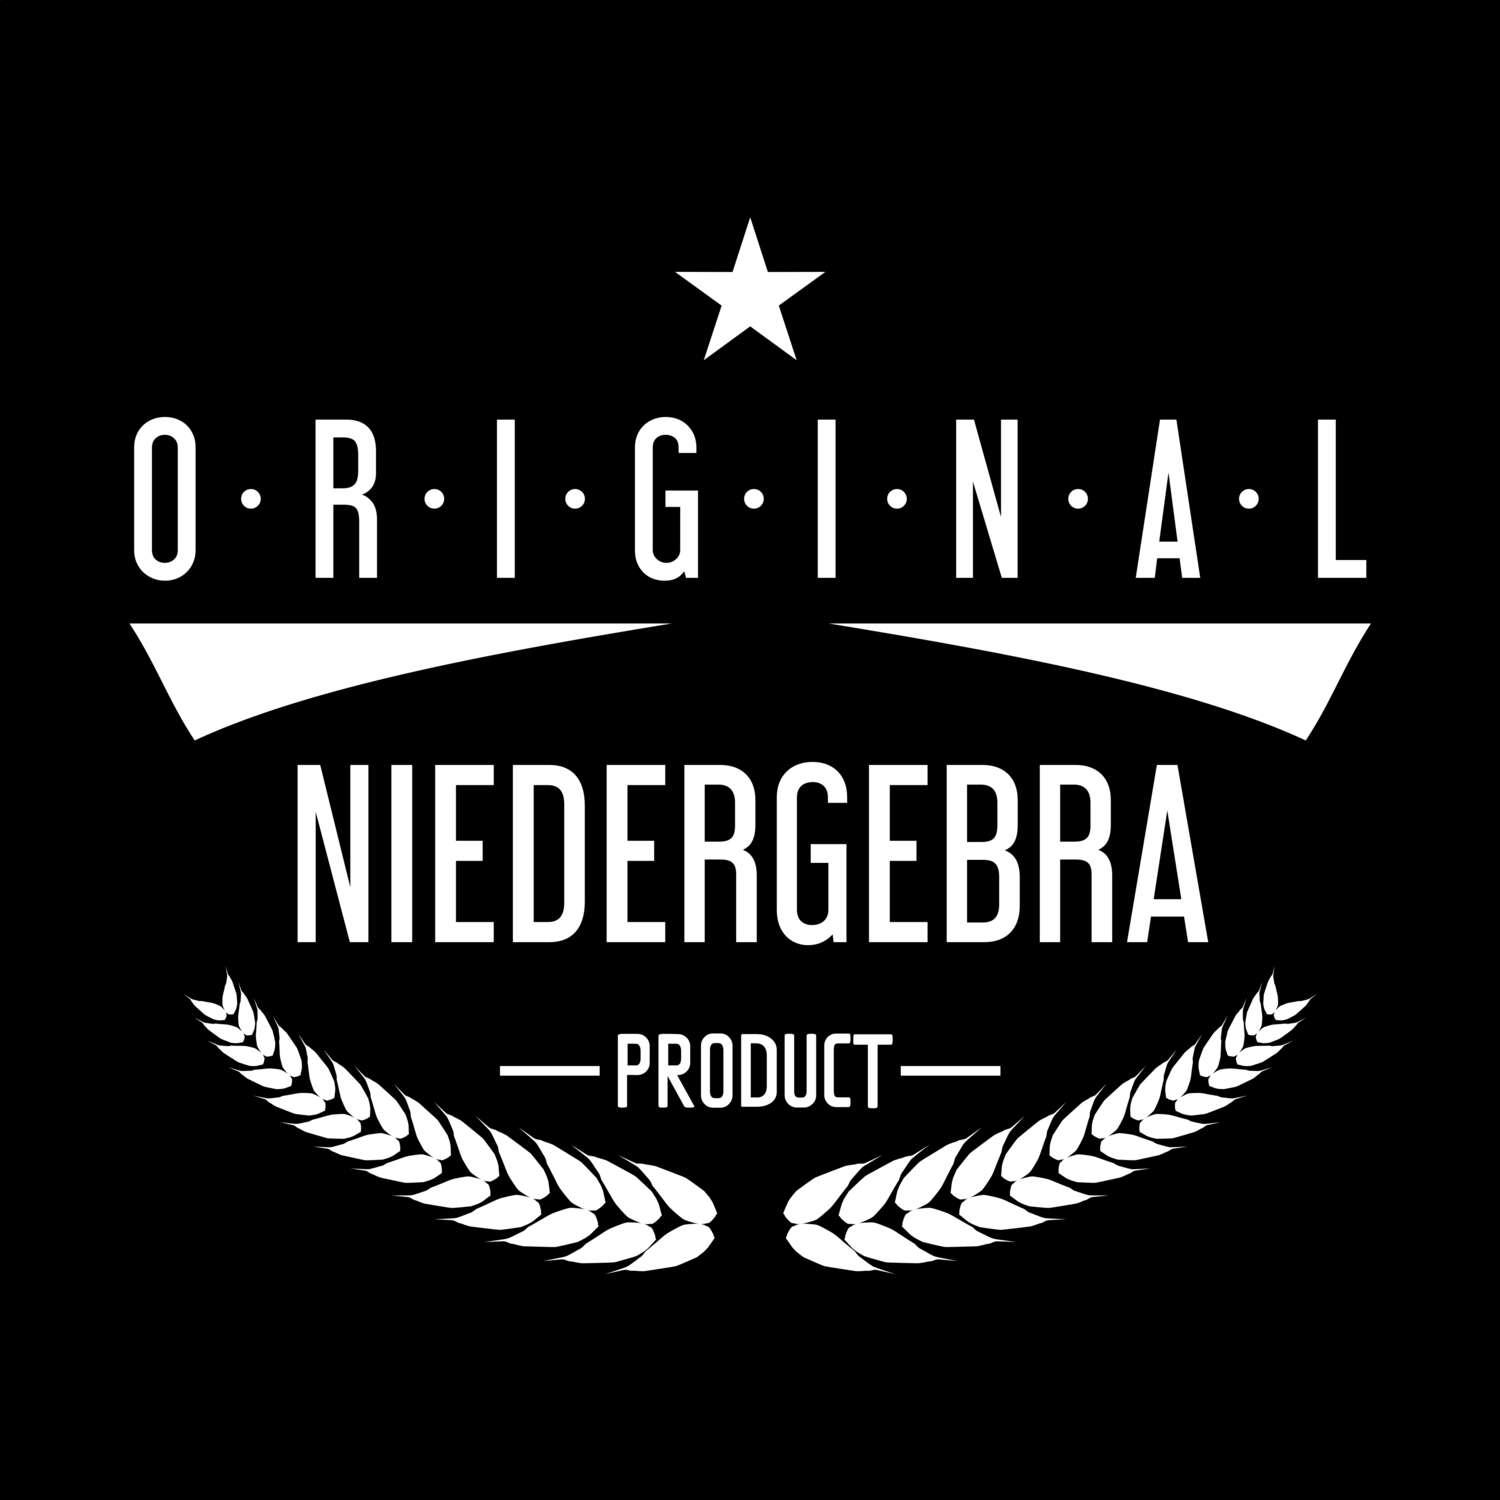 Niedergebra T-Shirt »Original Product«